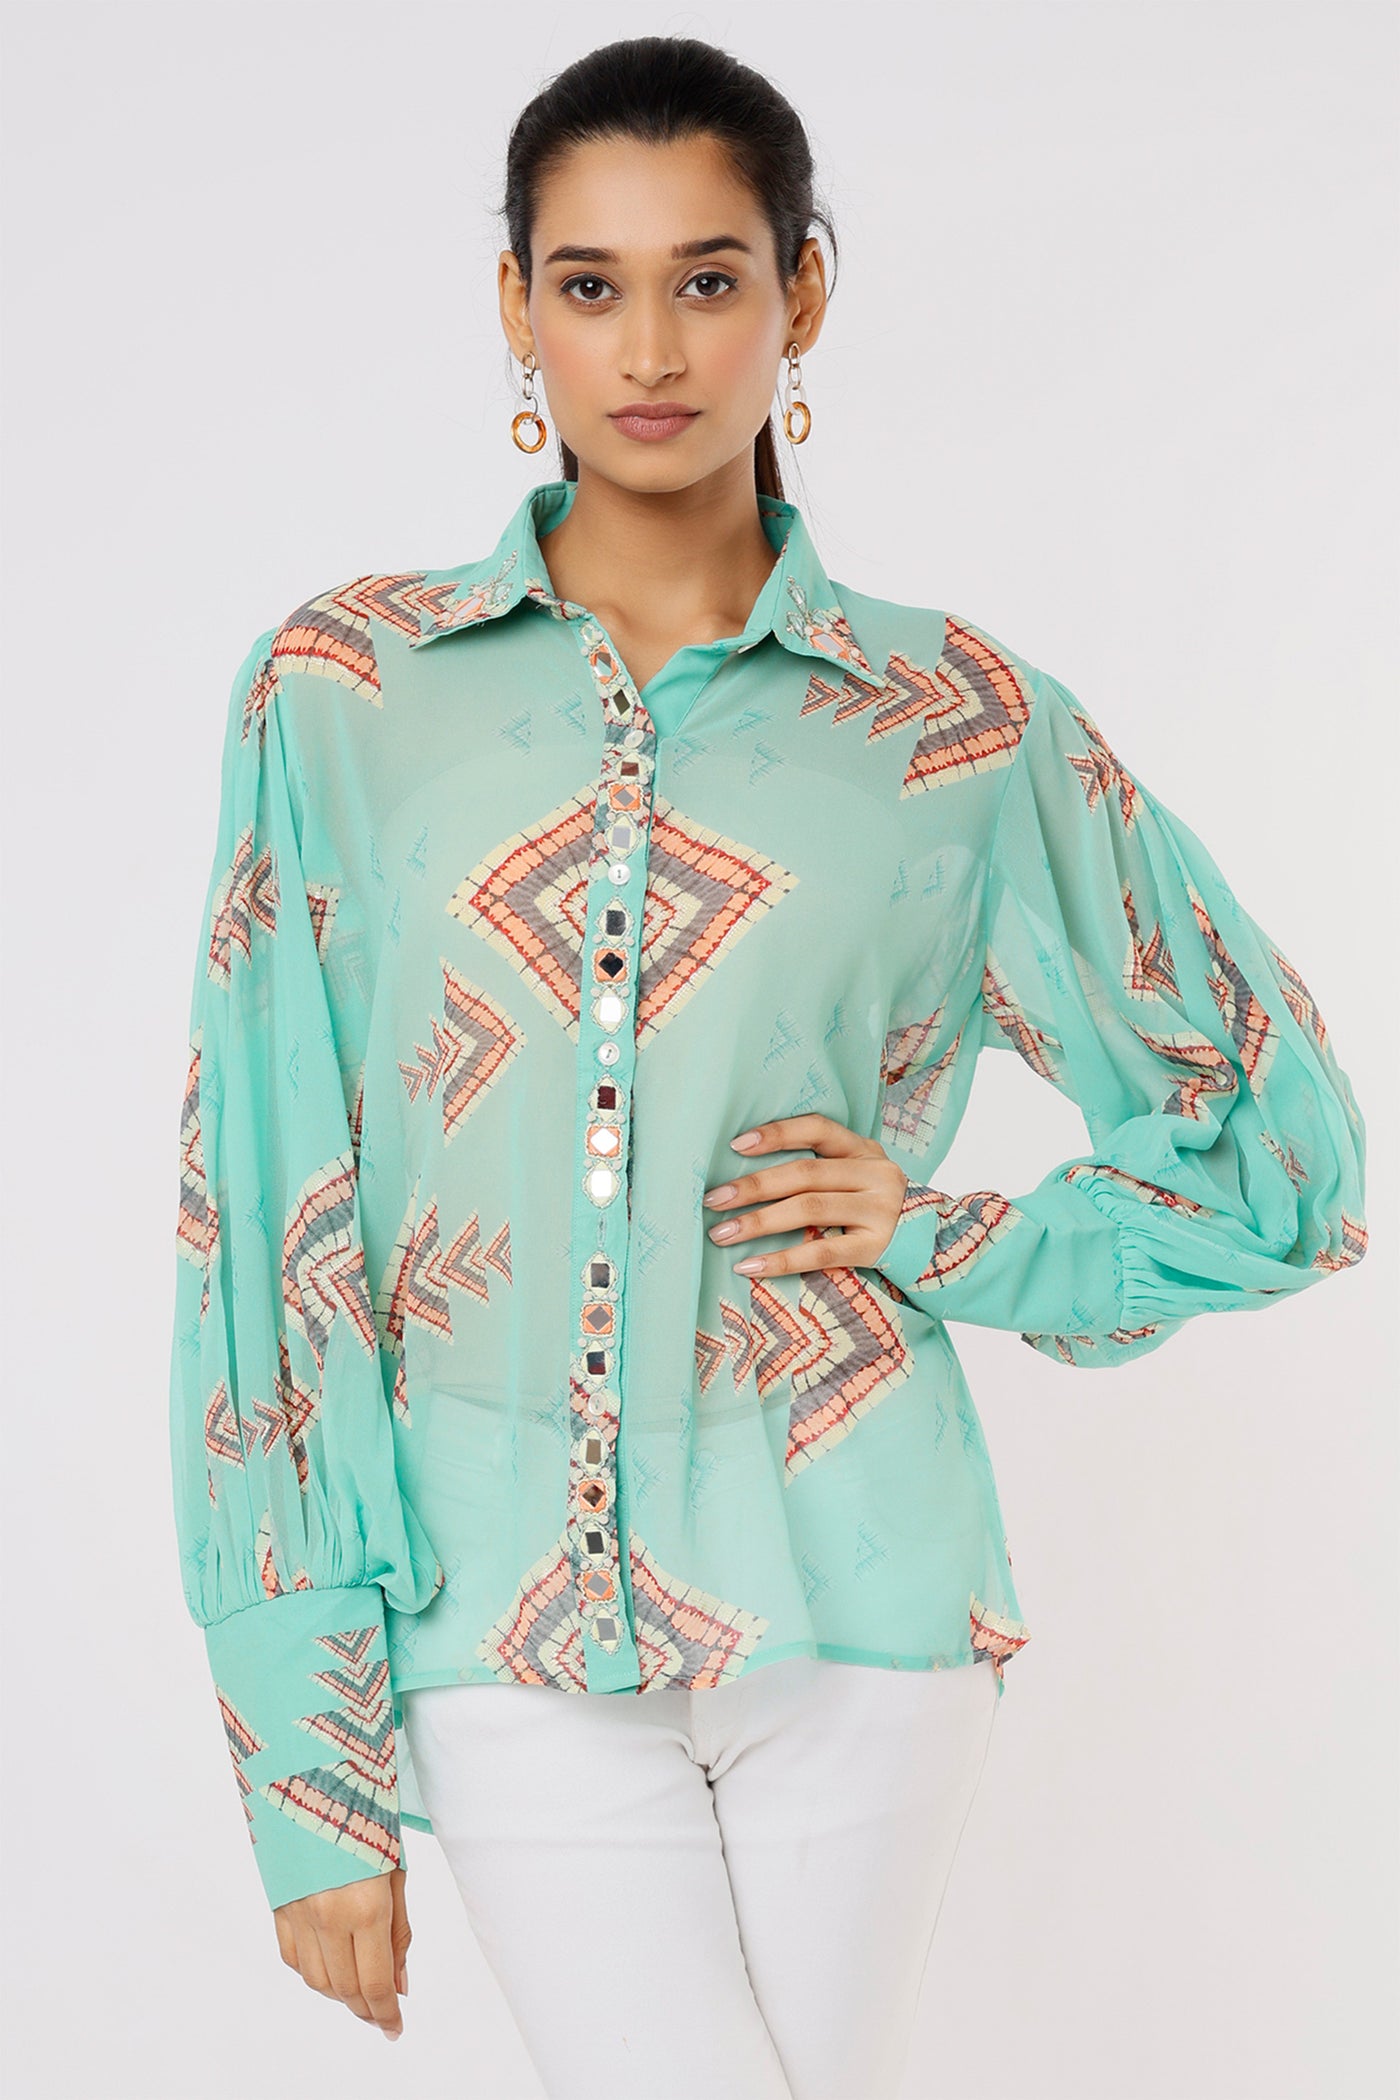 Gopi vaid Delou Full Sleeves Shirt aqua blue festive Indian designer wear online shopping melange singapore